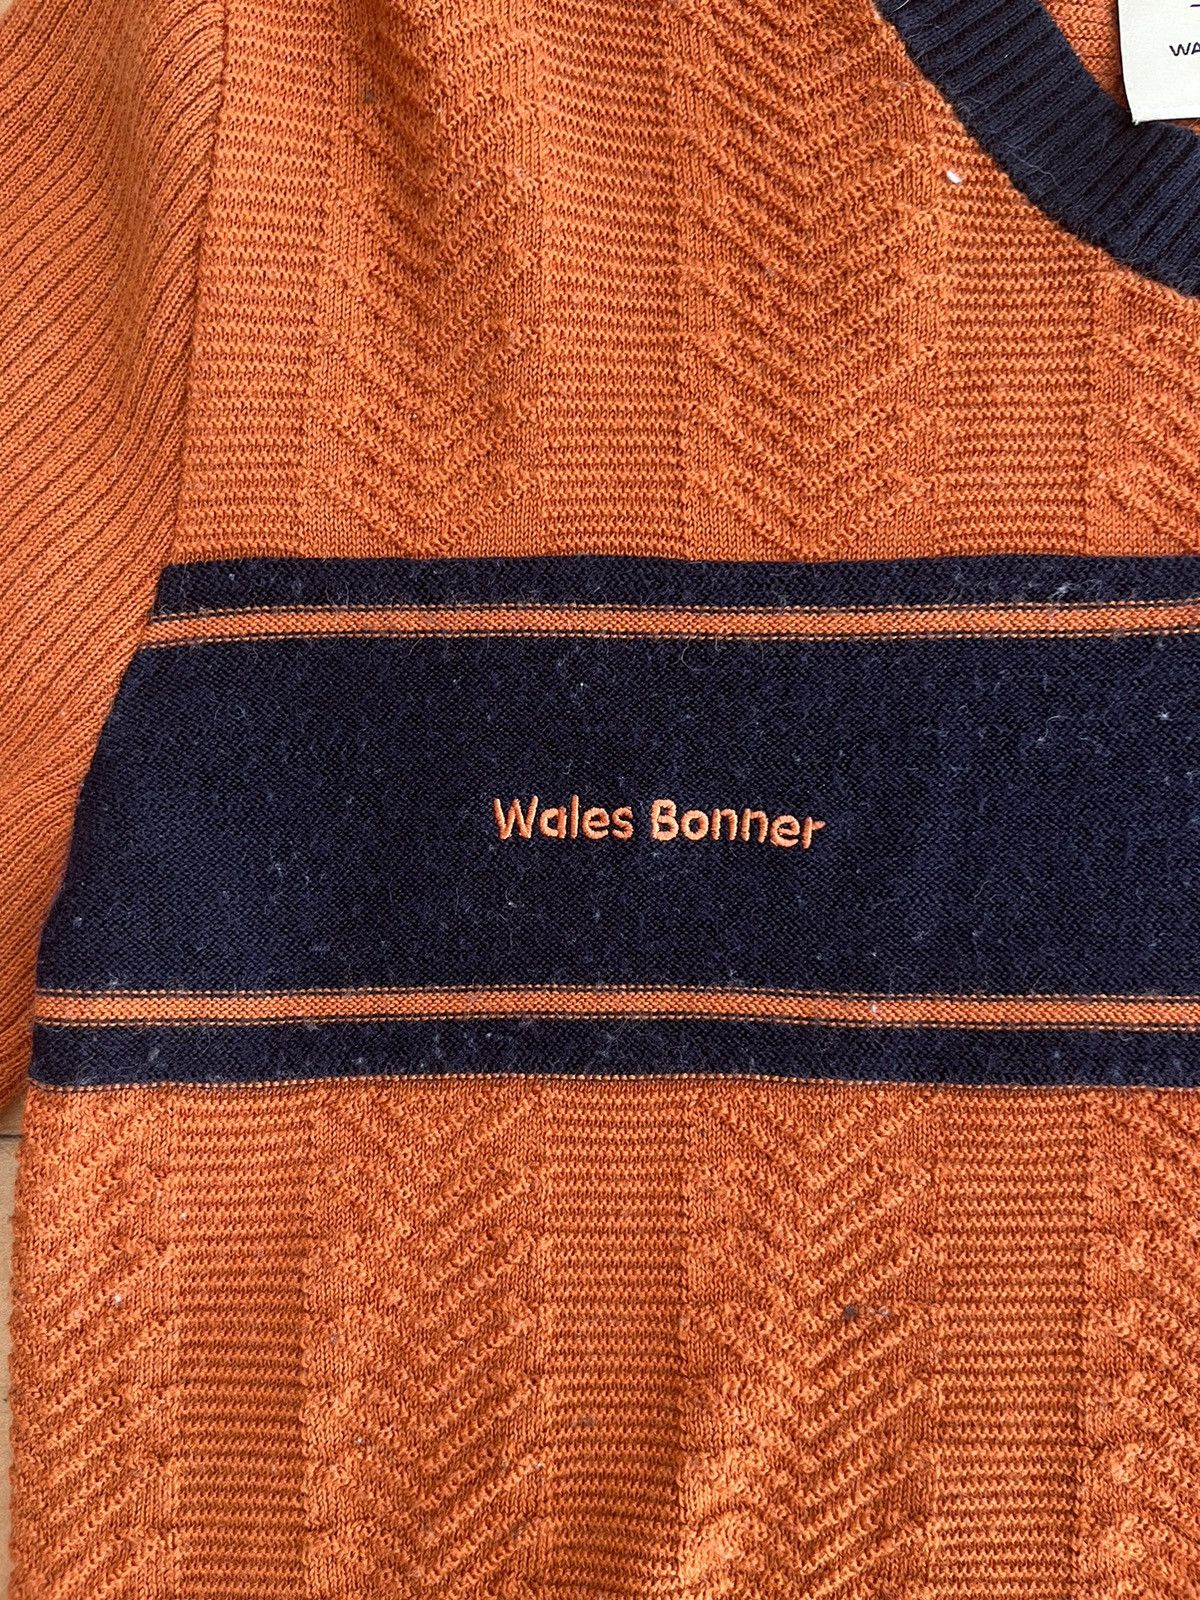 Wales Bonner x Adidas Knit Sweater - 4